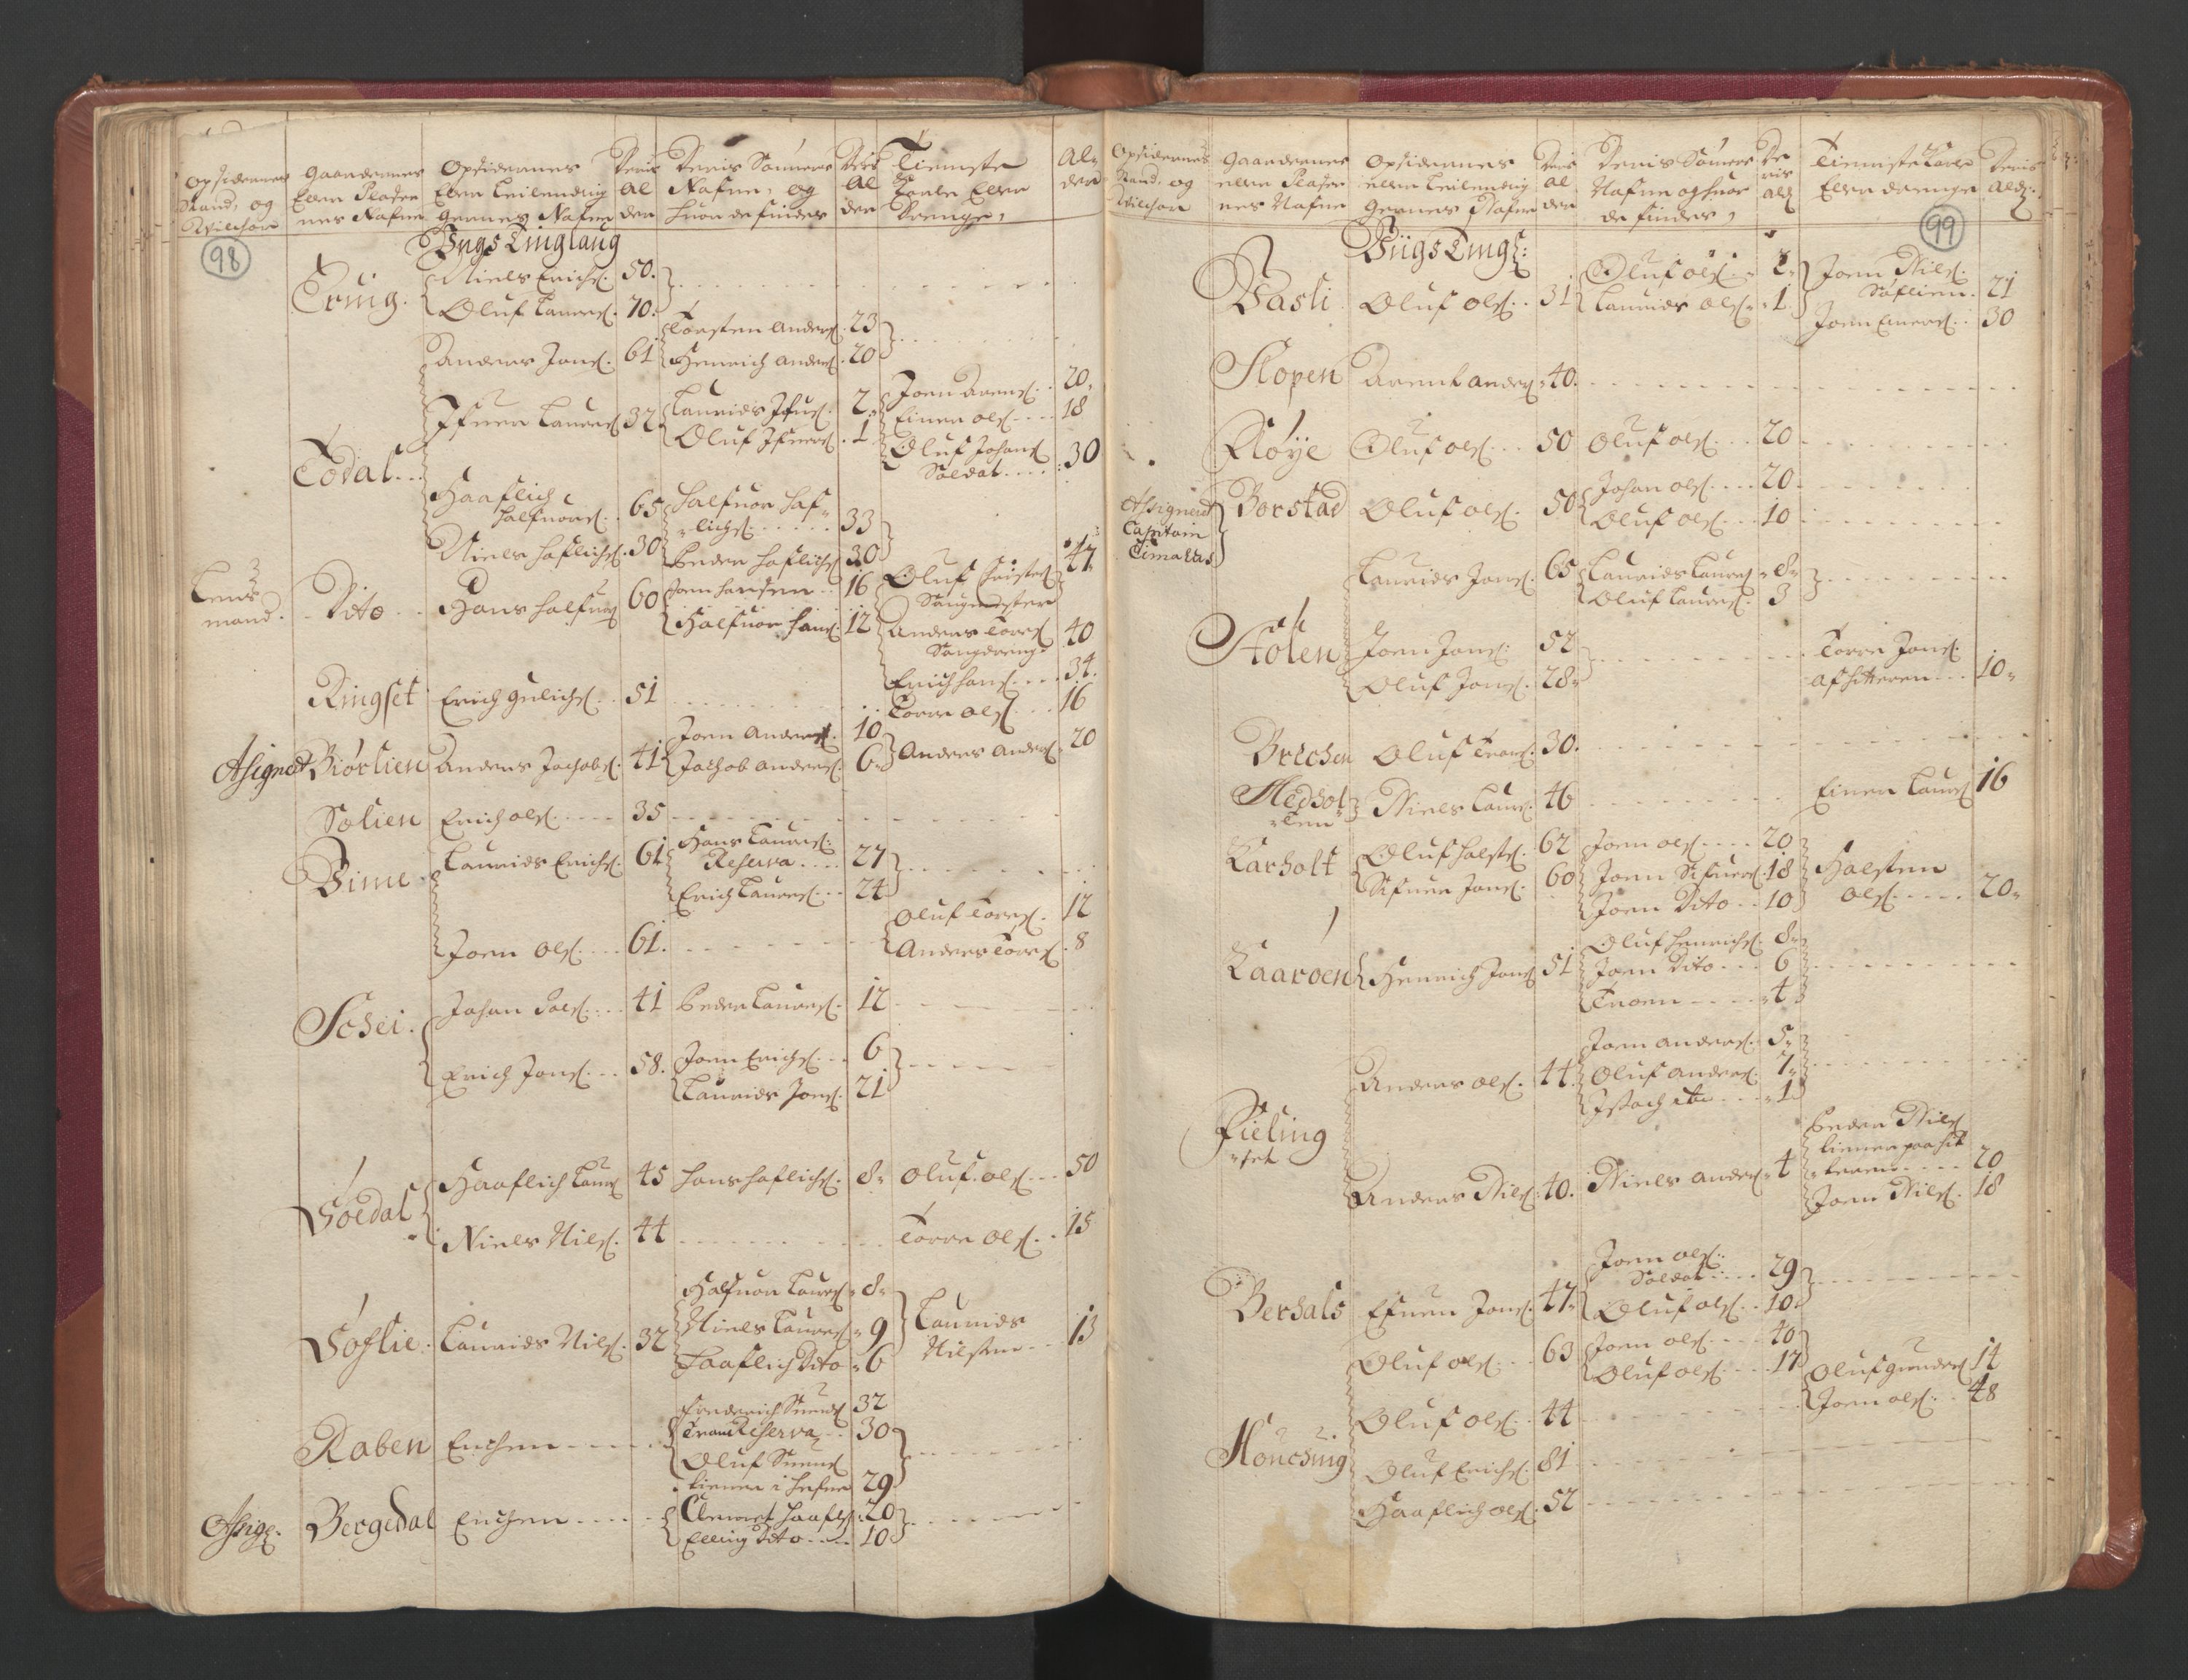 RA, Manntallet 1701, nr. 11: Nordmøre fogderi og Romsdal fogderi, 1701, s. 98-99